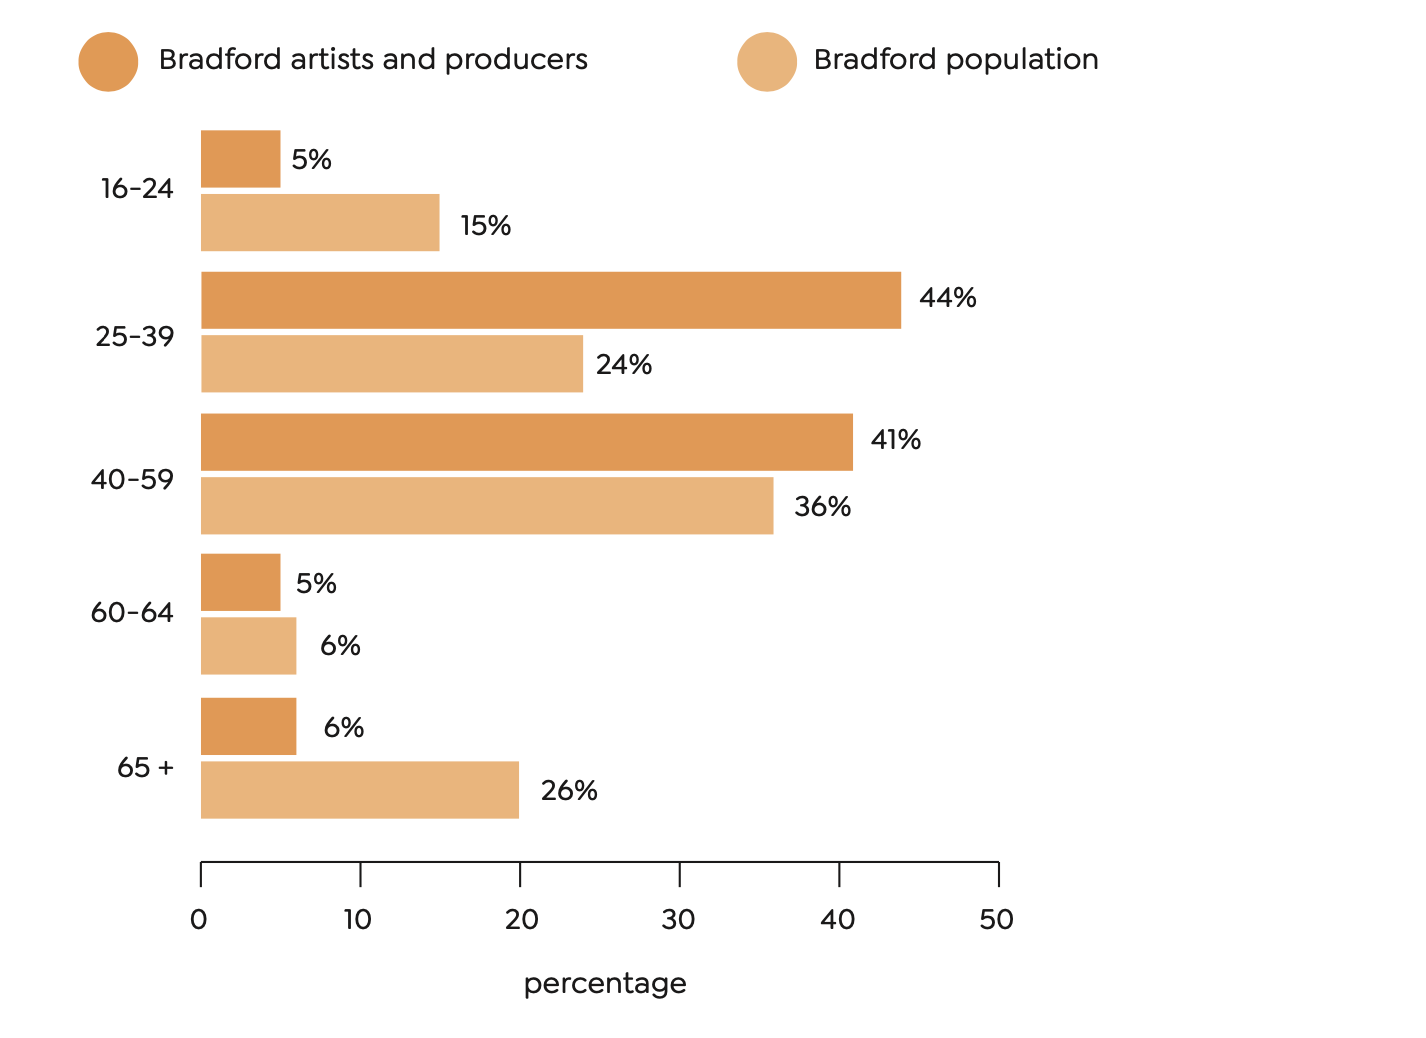 Bradford artists and producers
16-24: 5%
25-39: 44%
40-59: 41%
60-64: 5%
65+: 6%

Bradford population
16-24: 15%
25-39: 24%
40-59: 36%
60-64: 6%
65+: 26%